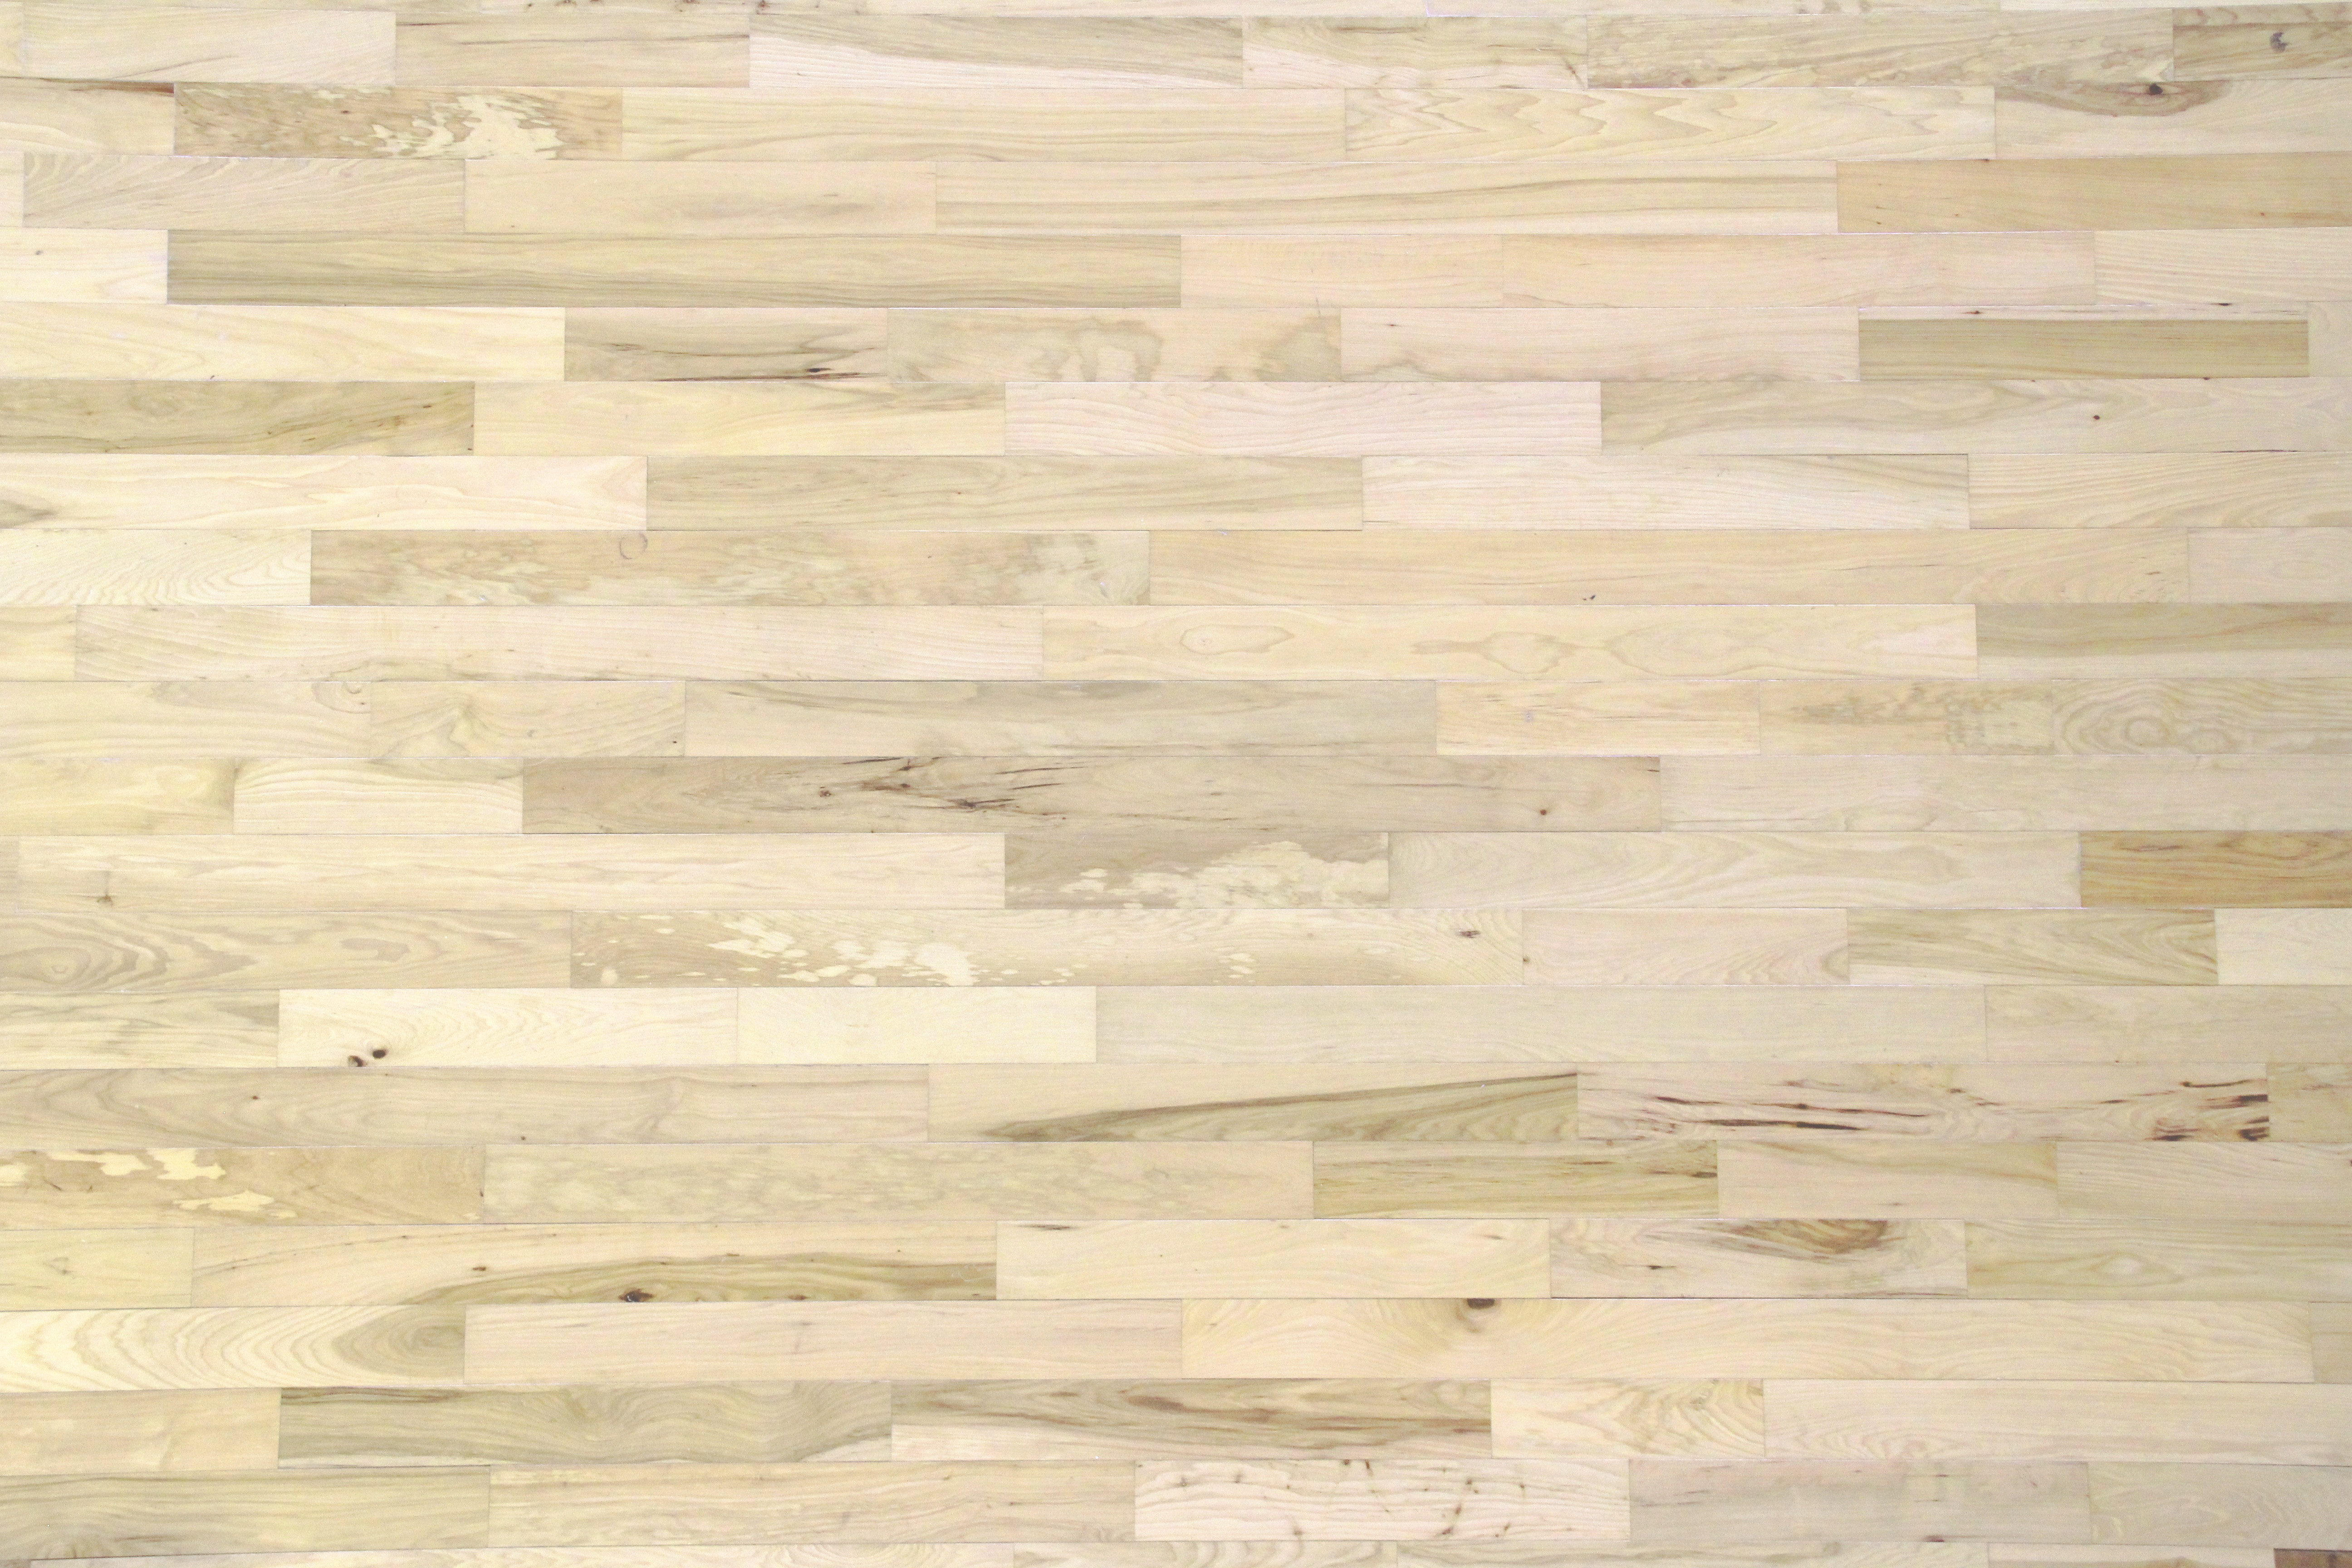 hardwood floor colors for 2017 of free images texture wall pine construction tile lumber regarding wood texture floor wall pine construction tile lumber surface wood floor basketball court hardwood wooden flooring